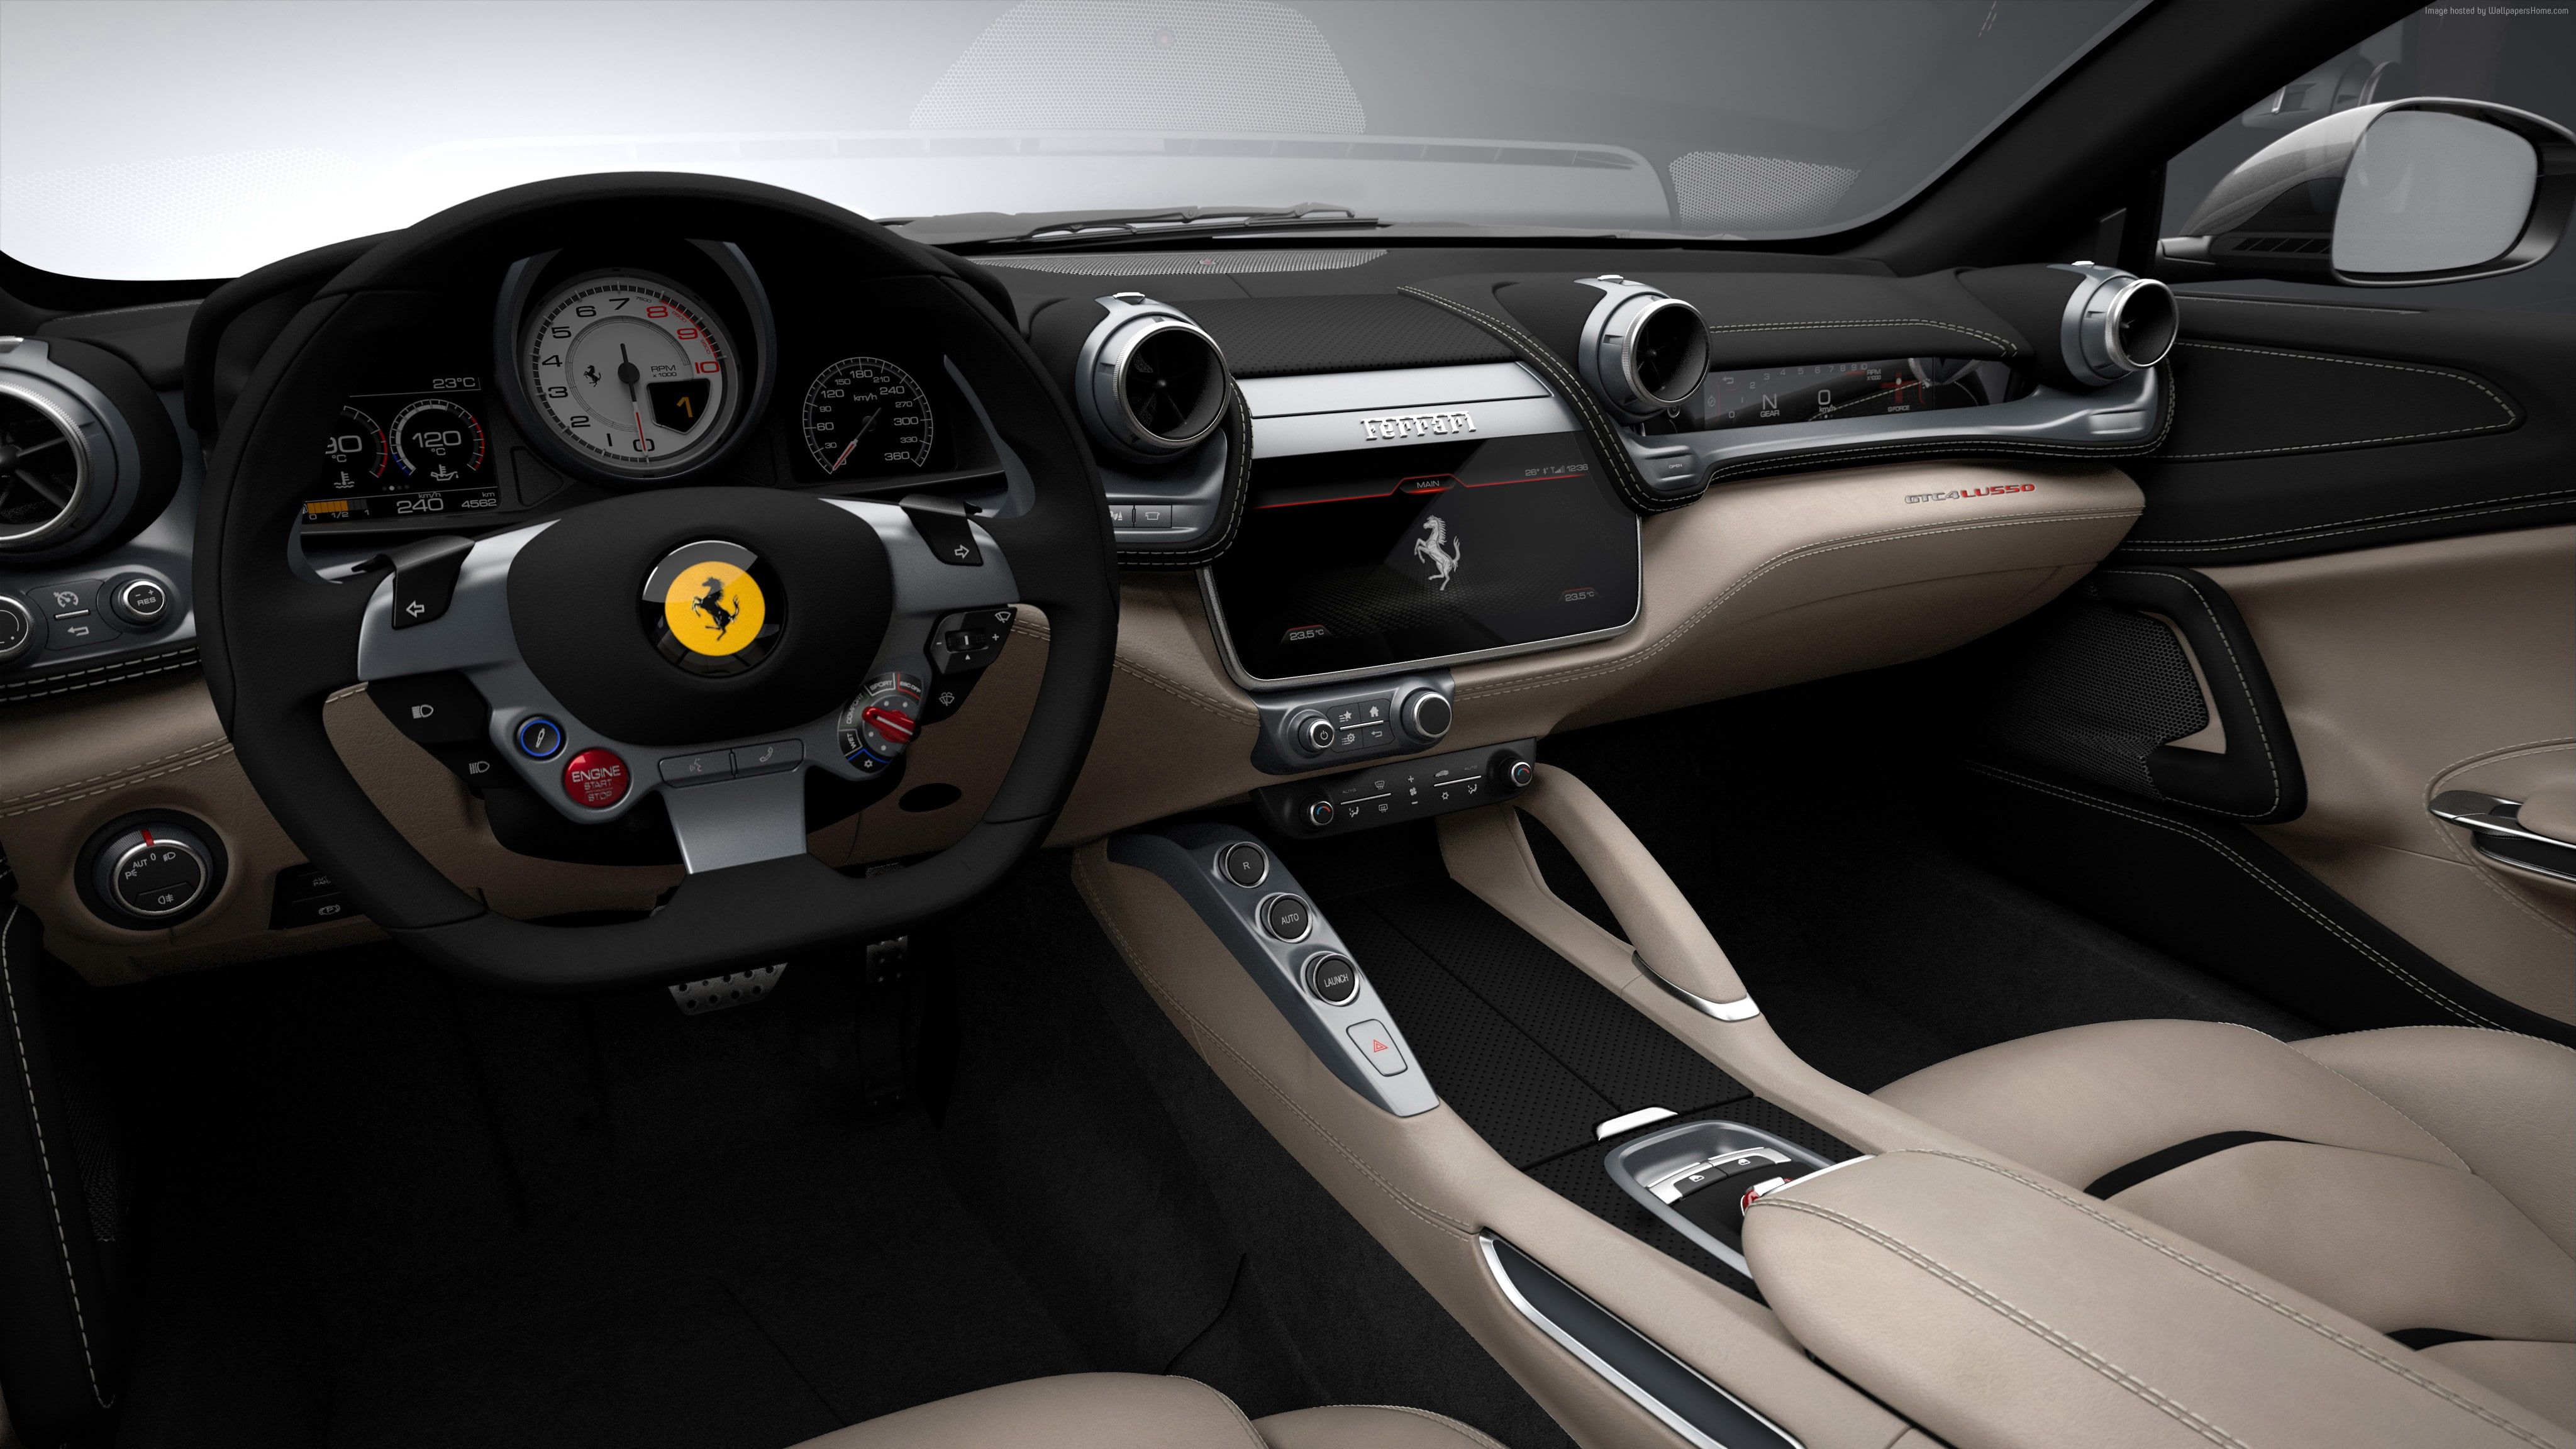 Ferrari Gtc4Lusso Wallpapers